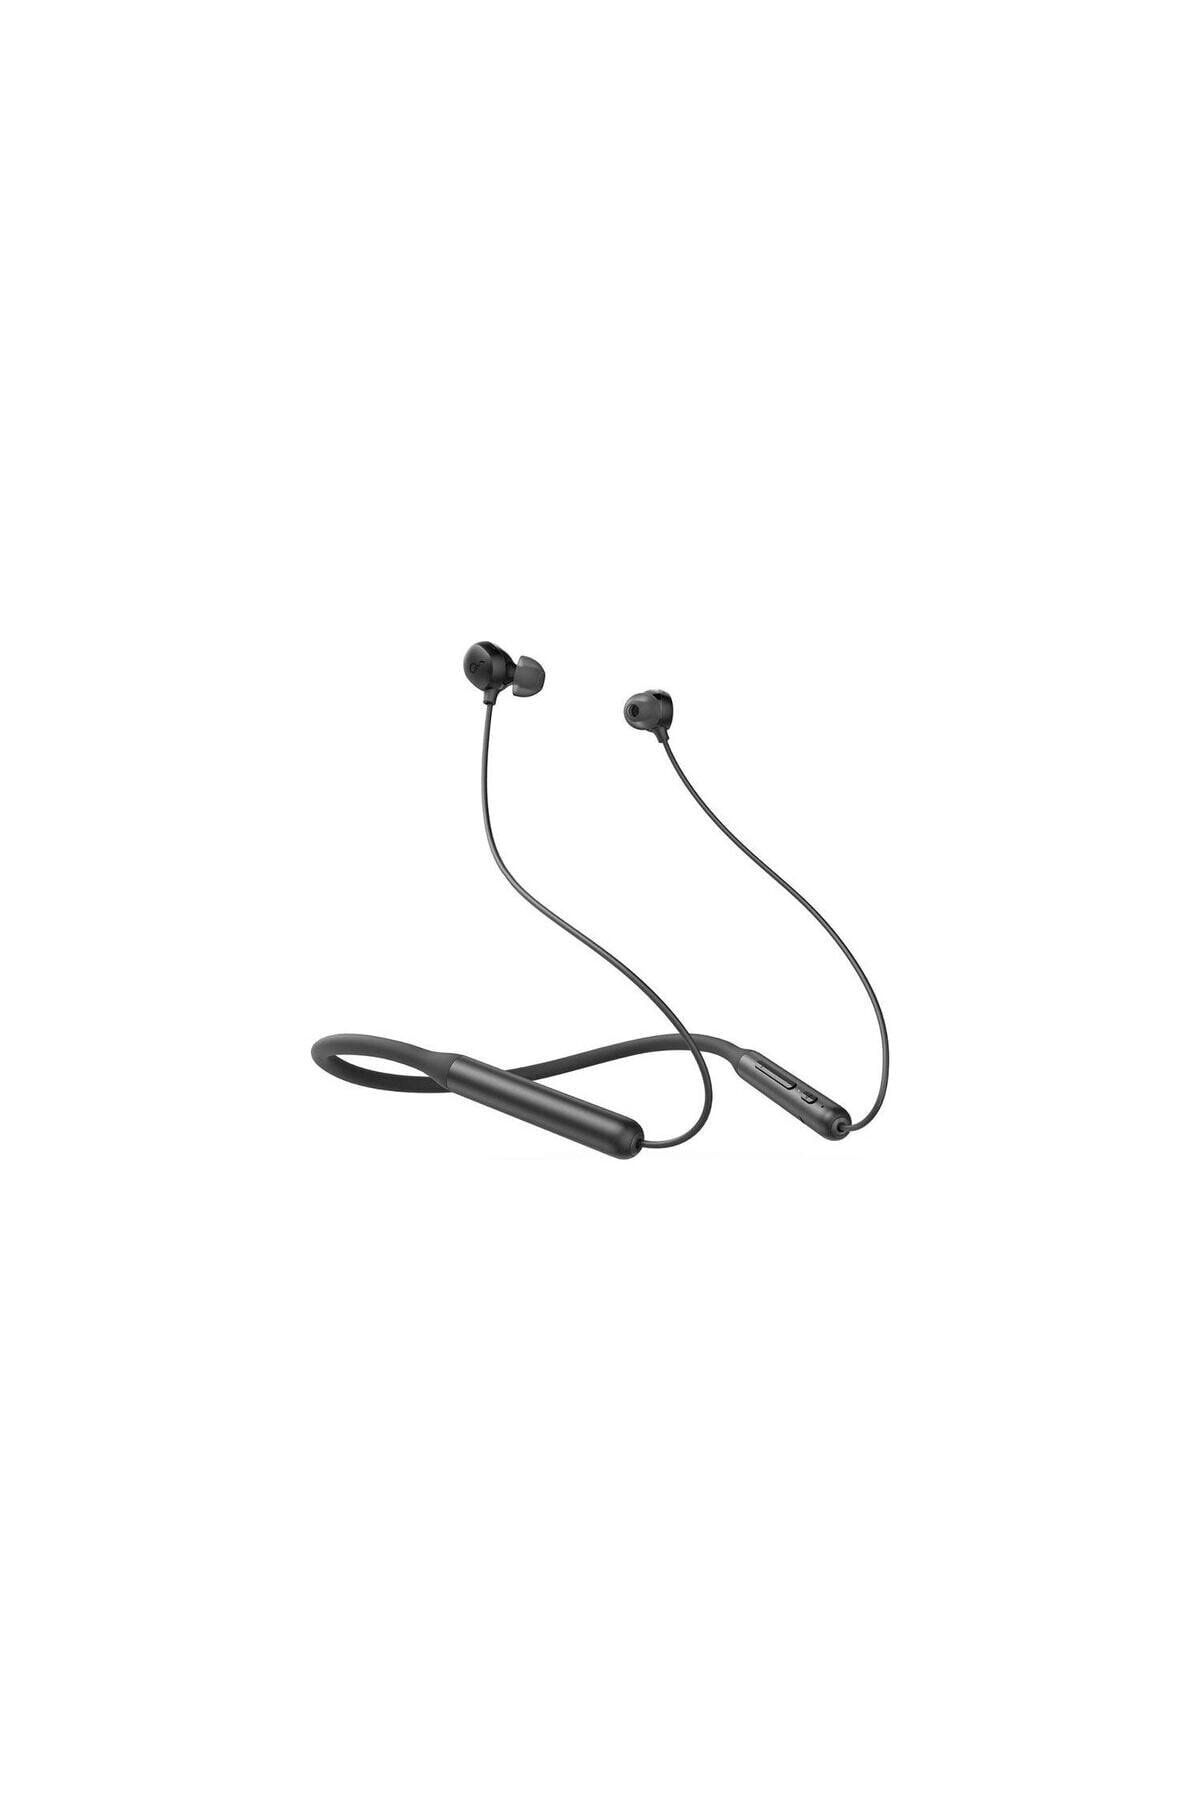 Anker Soundcore Life U2i Bluetooth 5.0 Kablosuz Kulaklık - Ipx5 Suya Dayanıklı Siyah - A3991